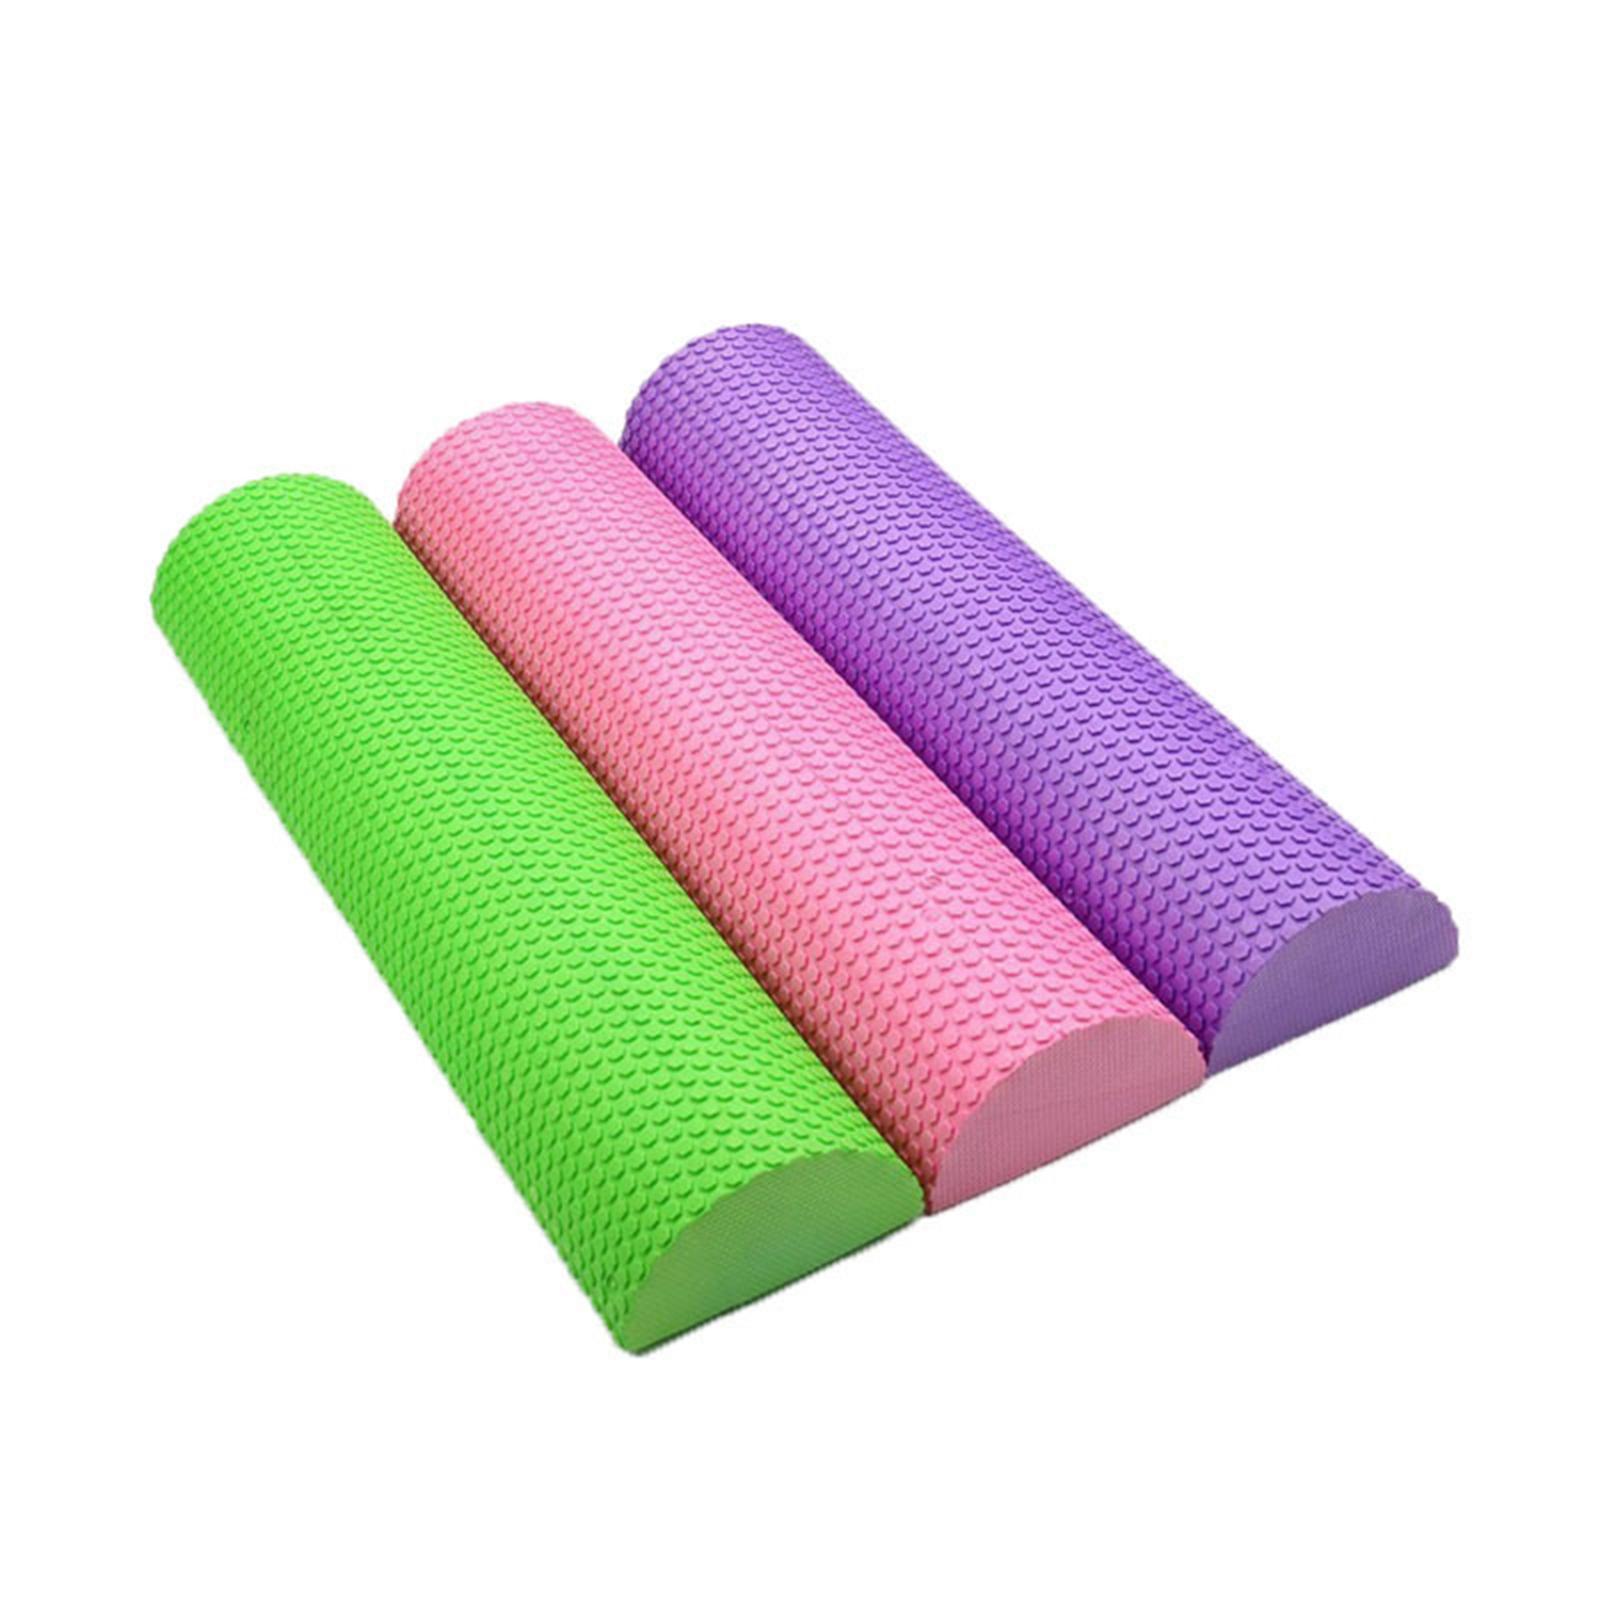 Foam Roller Half Round Massage Yoga Pilates Fitness Balance Yoga Pink 30cm